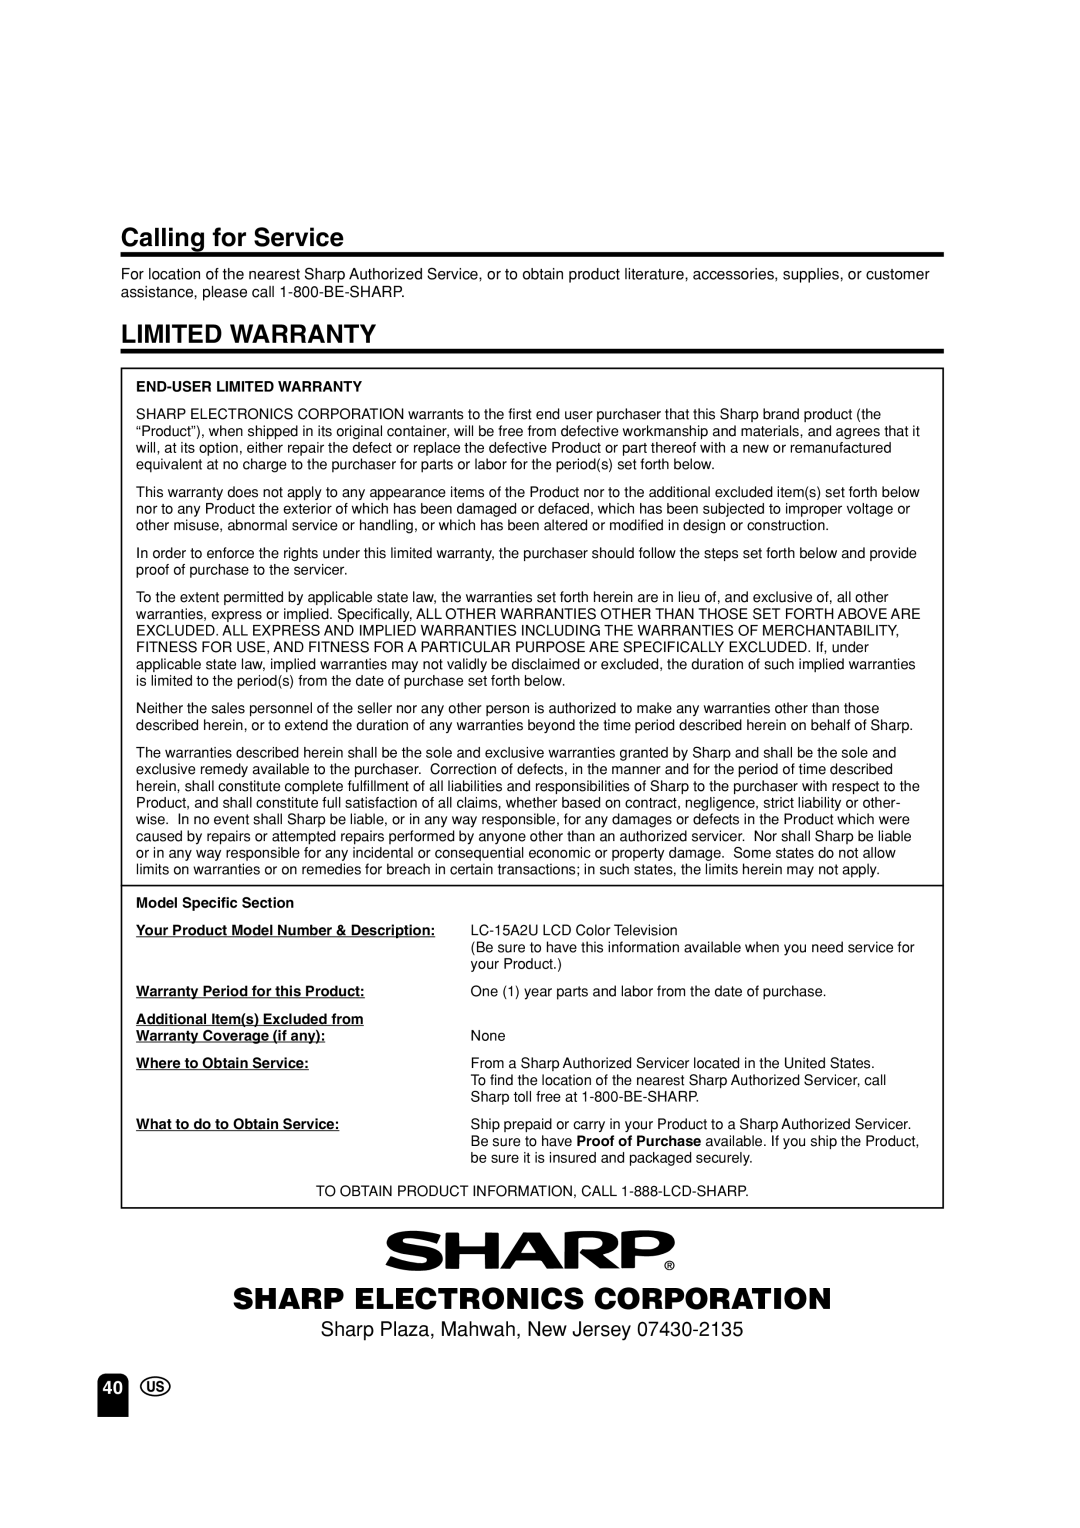 Sharp LC 15A2U Sharp Electronics Corporation, Calling for Service, Limited Warranty, Sharp Plaza, Mahwah, New Jersey 